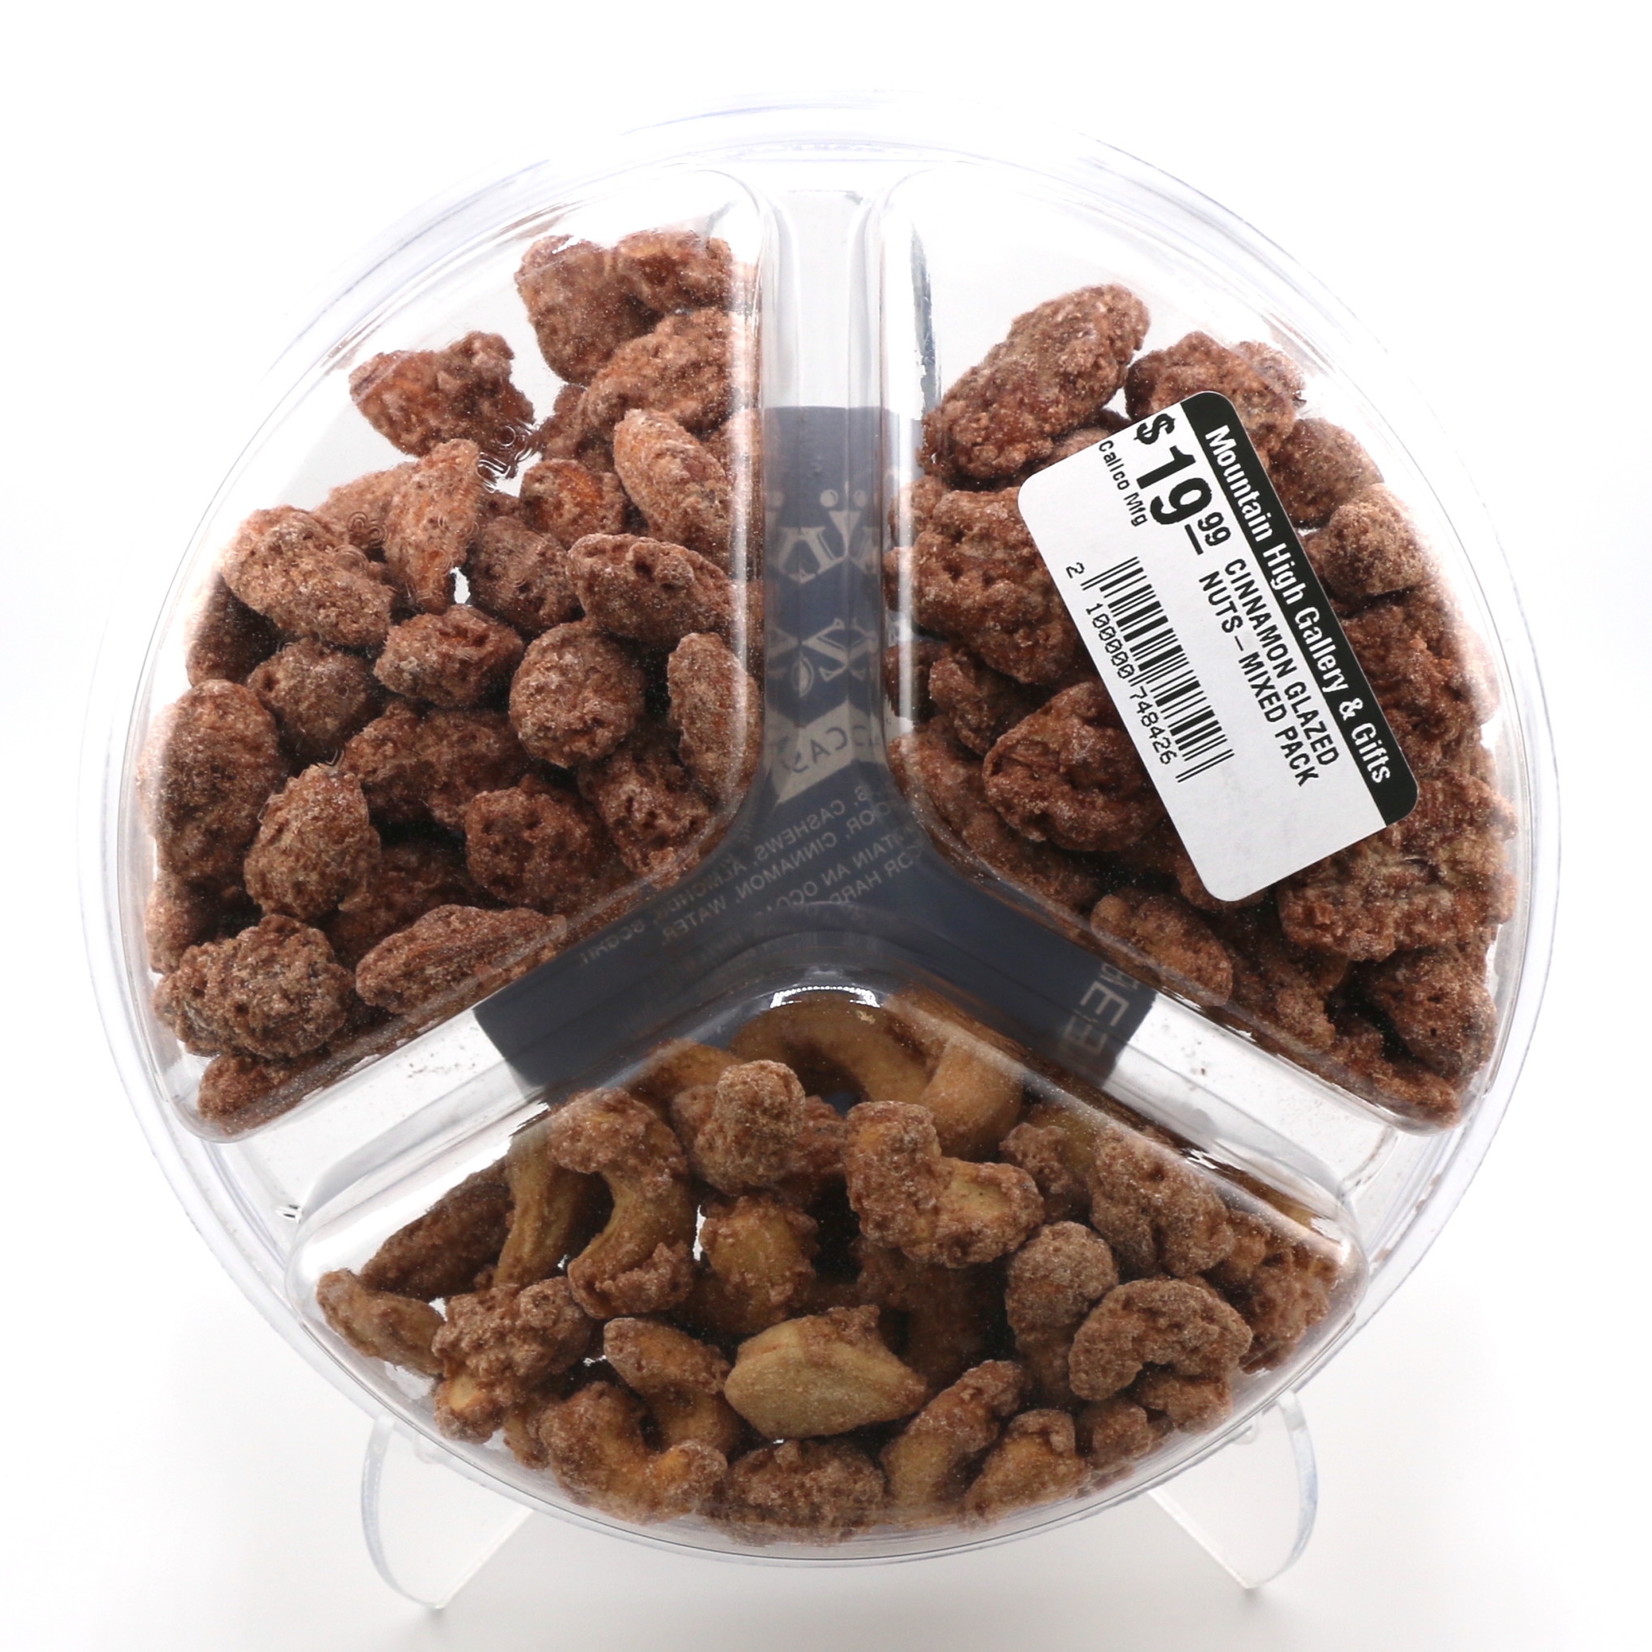 Calico Mfg Cinnamon Glazed Nuts - Mixed Pack